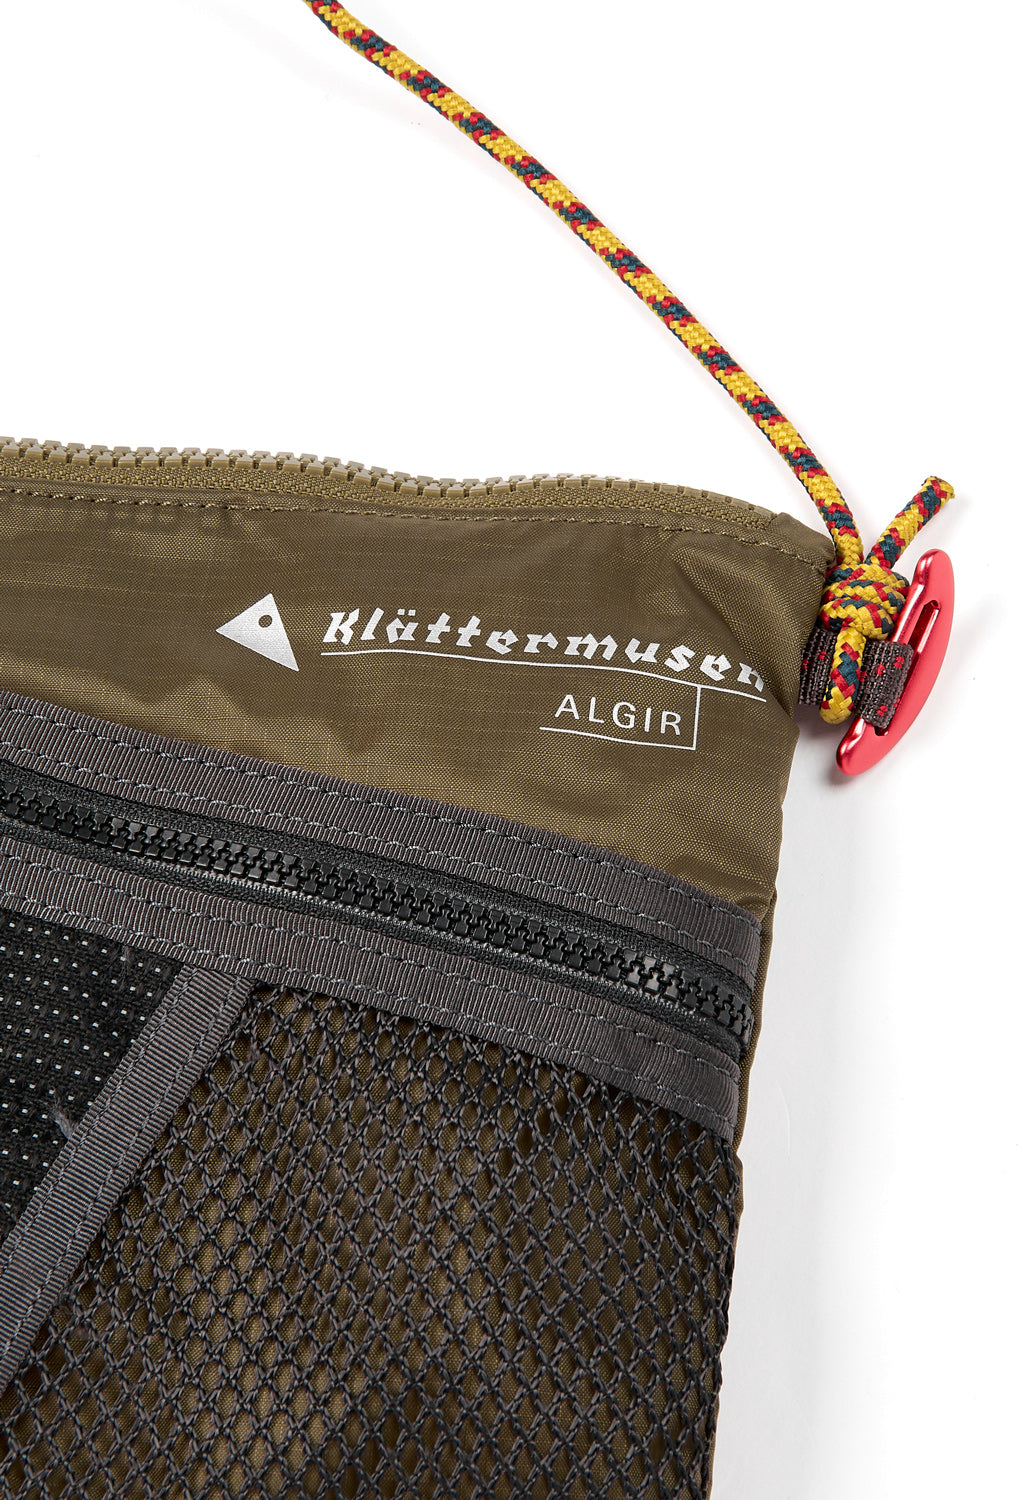 Klattermusen Algir Accessory Bag Medium - Olive